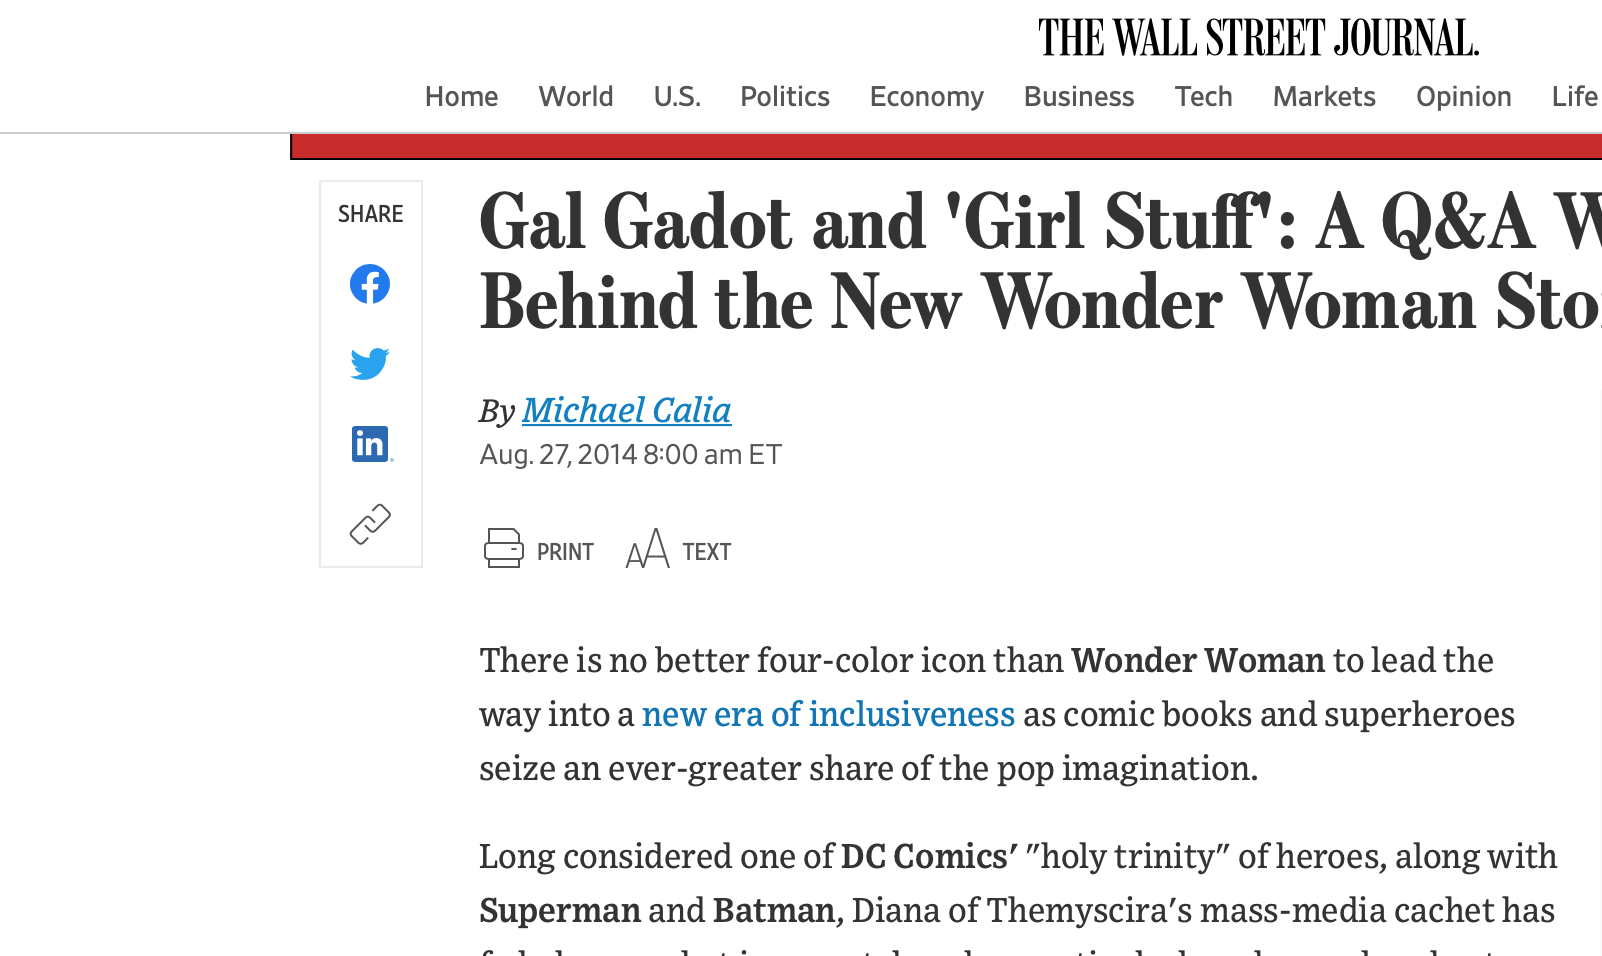 The Wall Street Journal: Gal Godot and Girl Stuff 